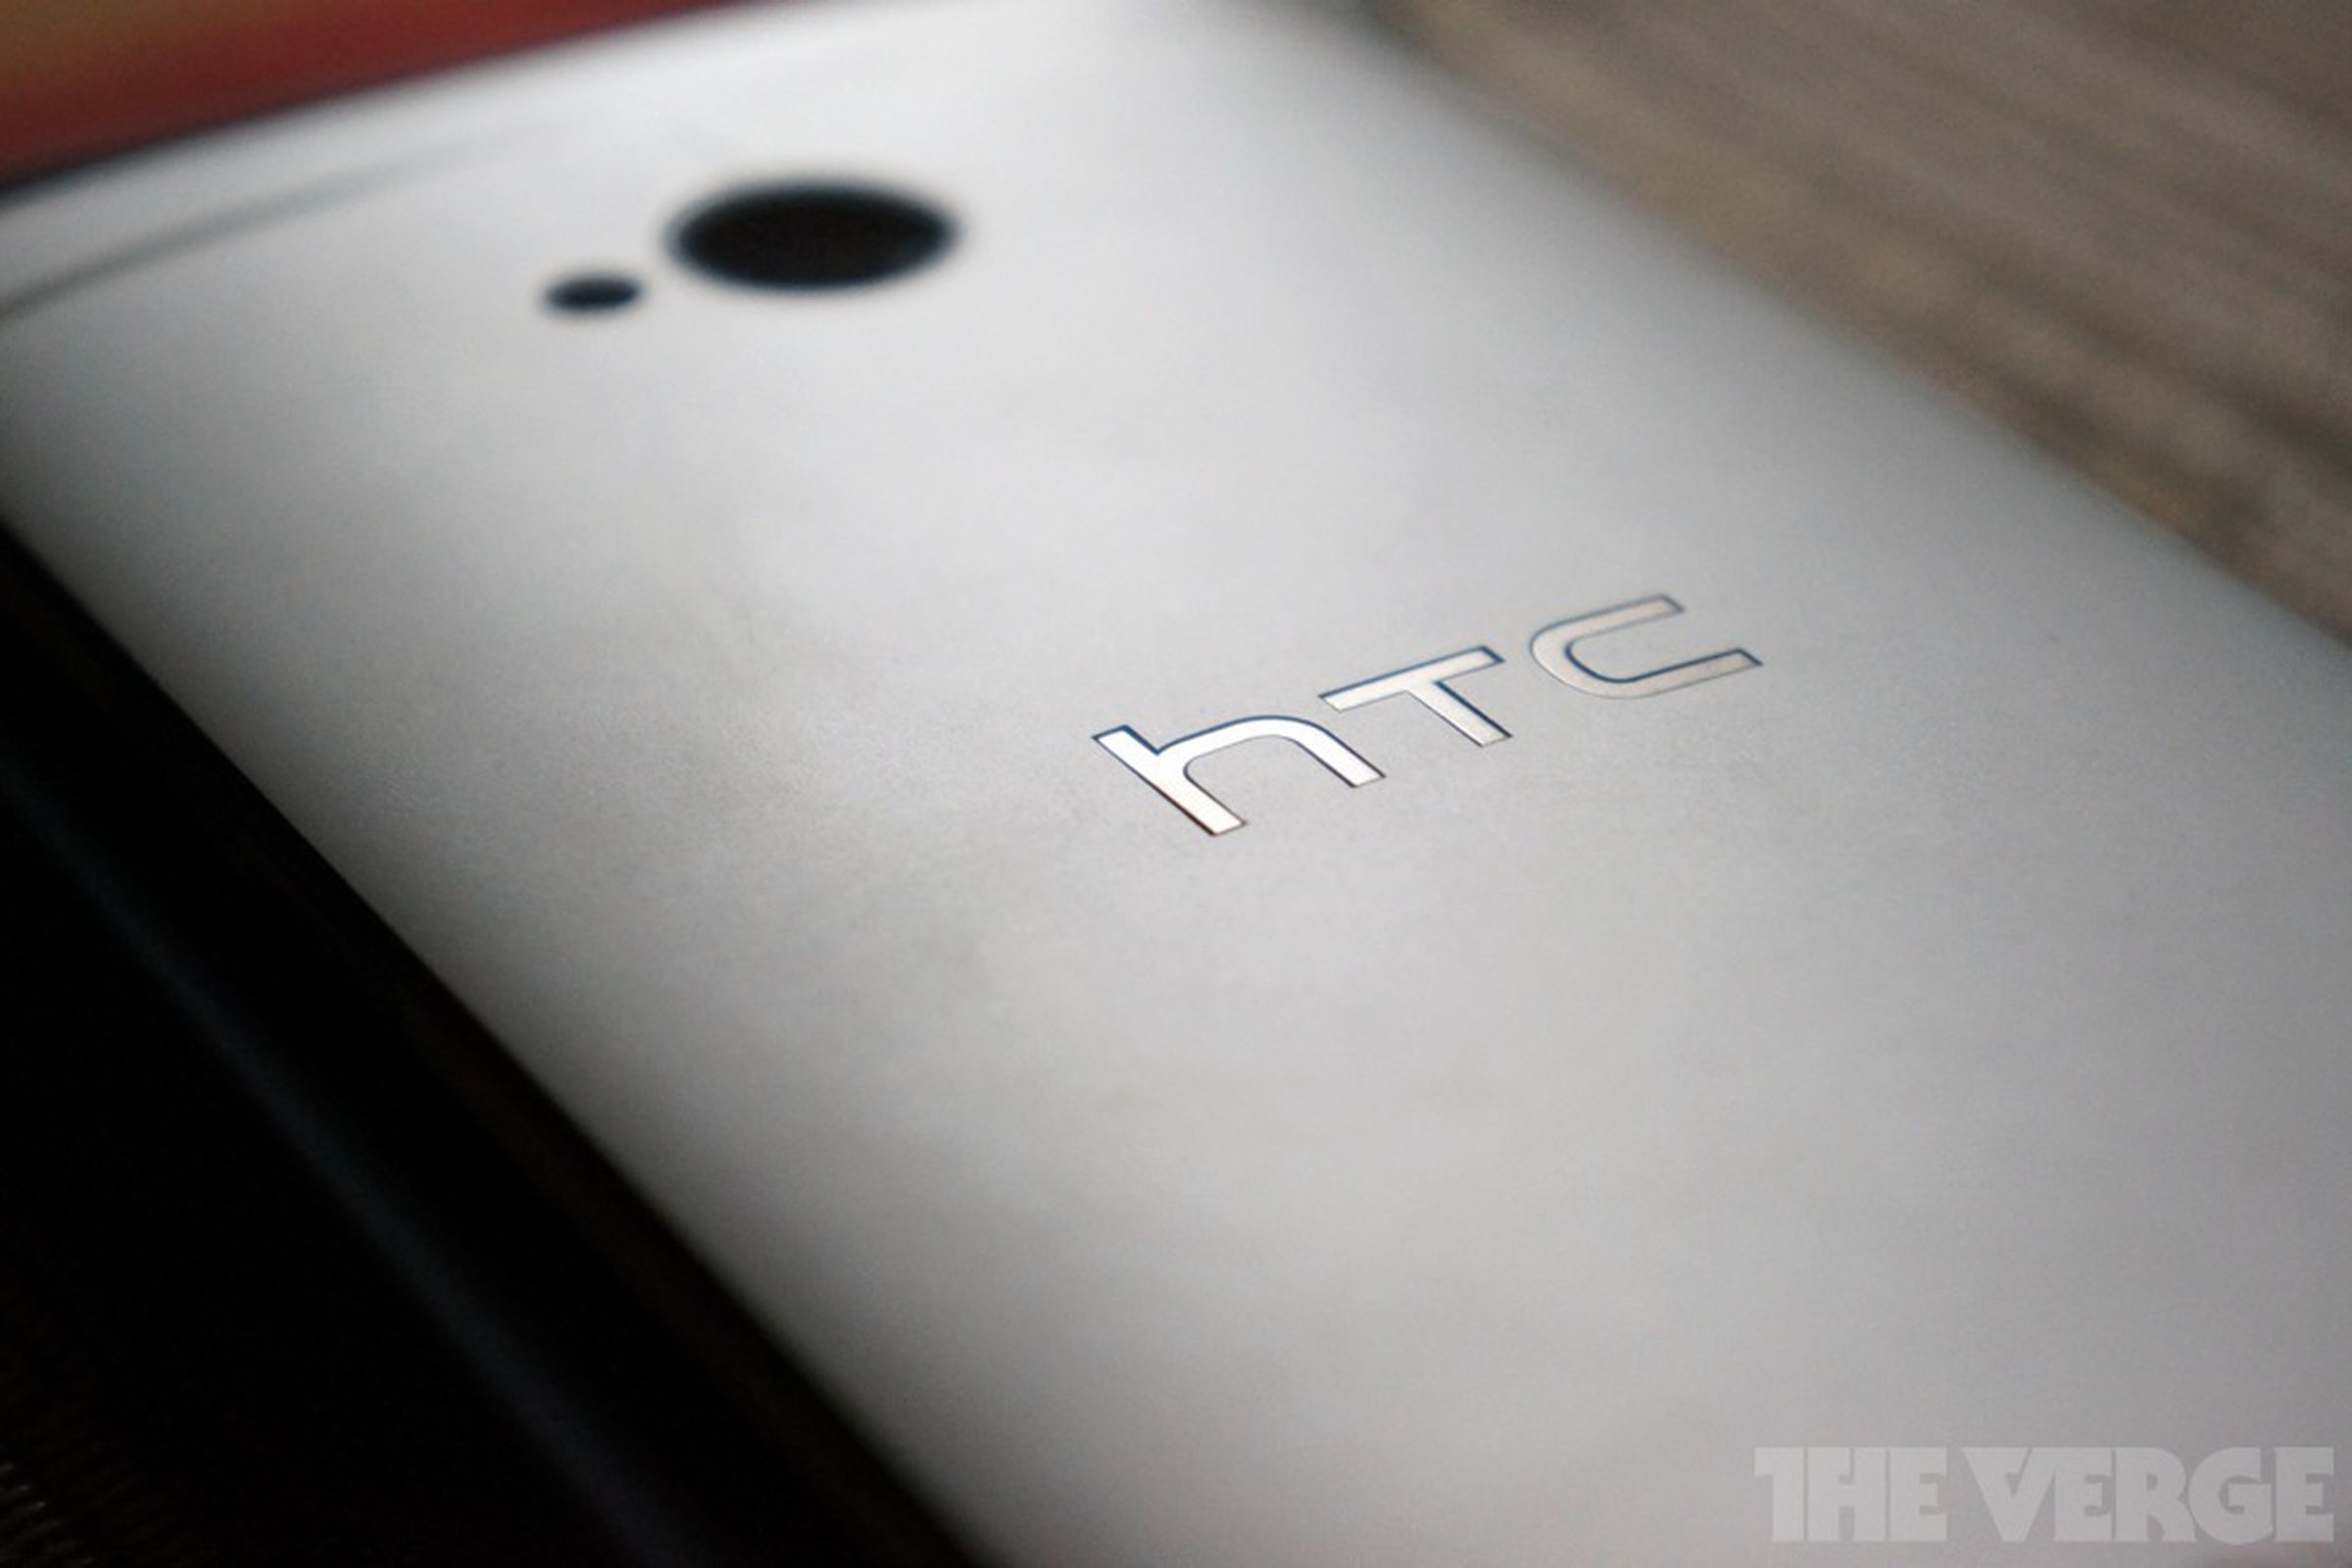 HTC One (verge stock)